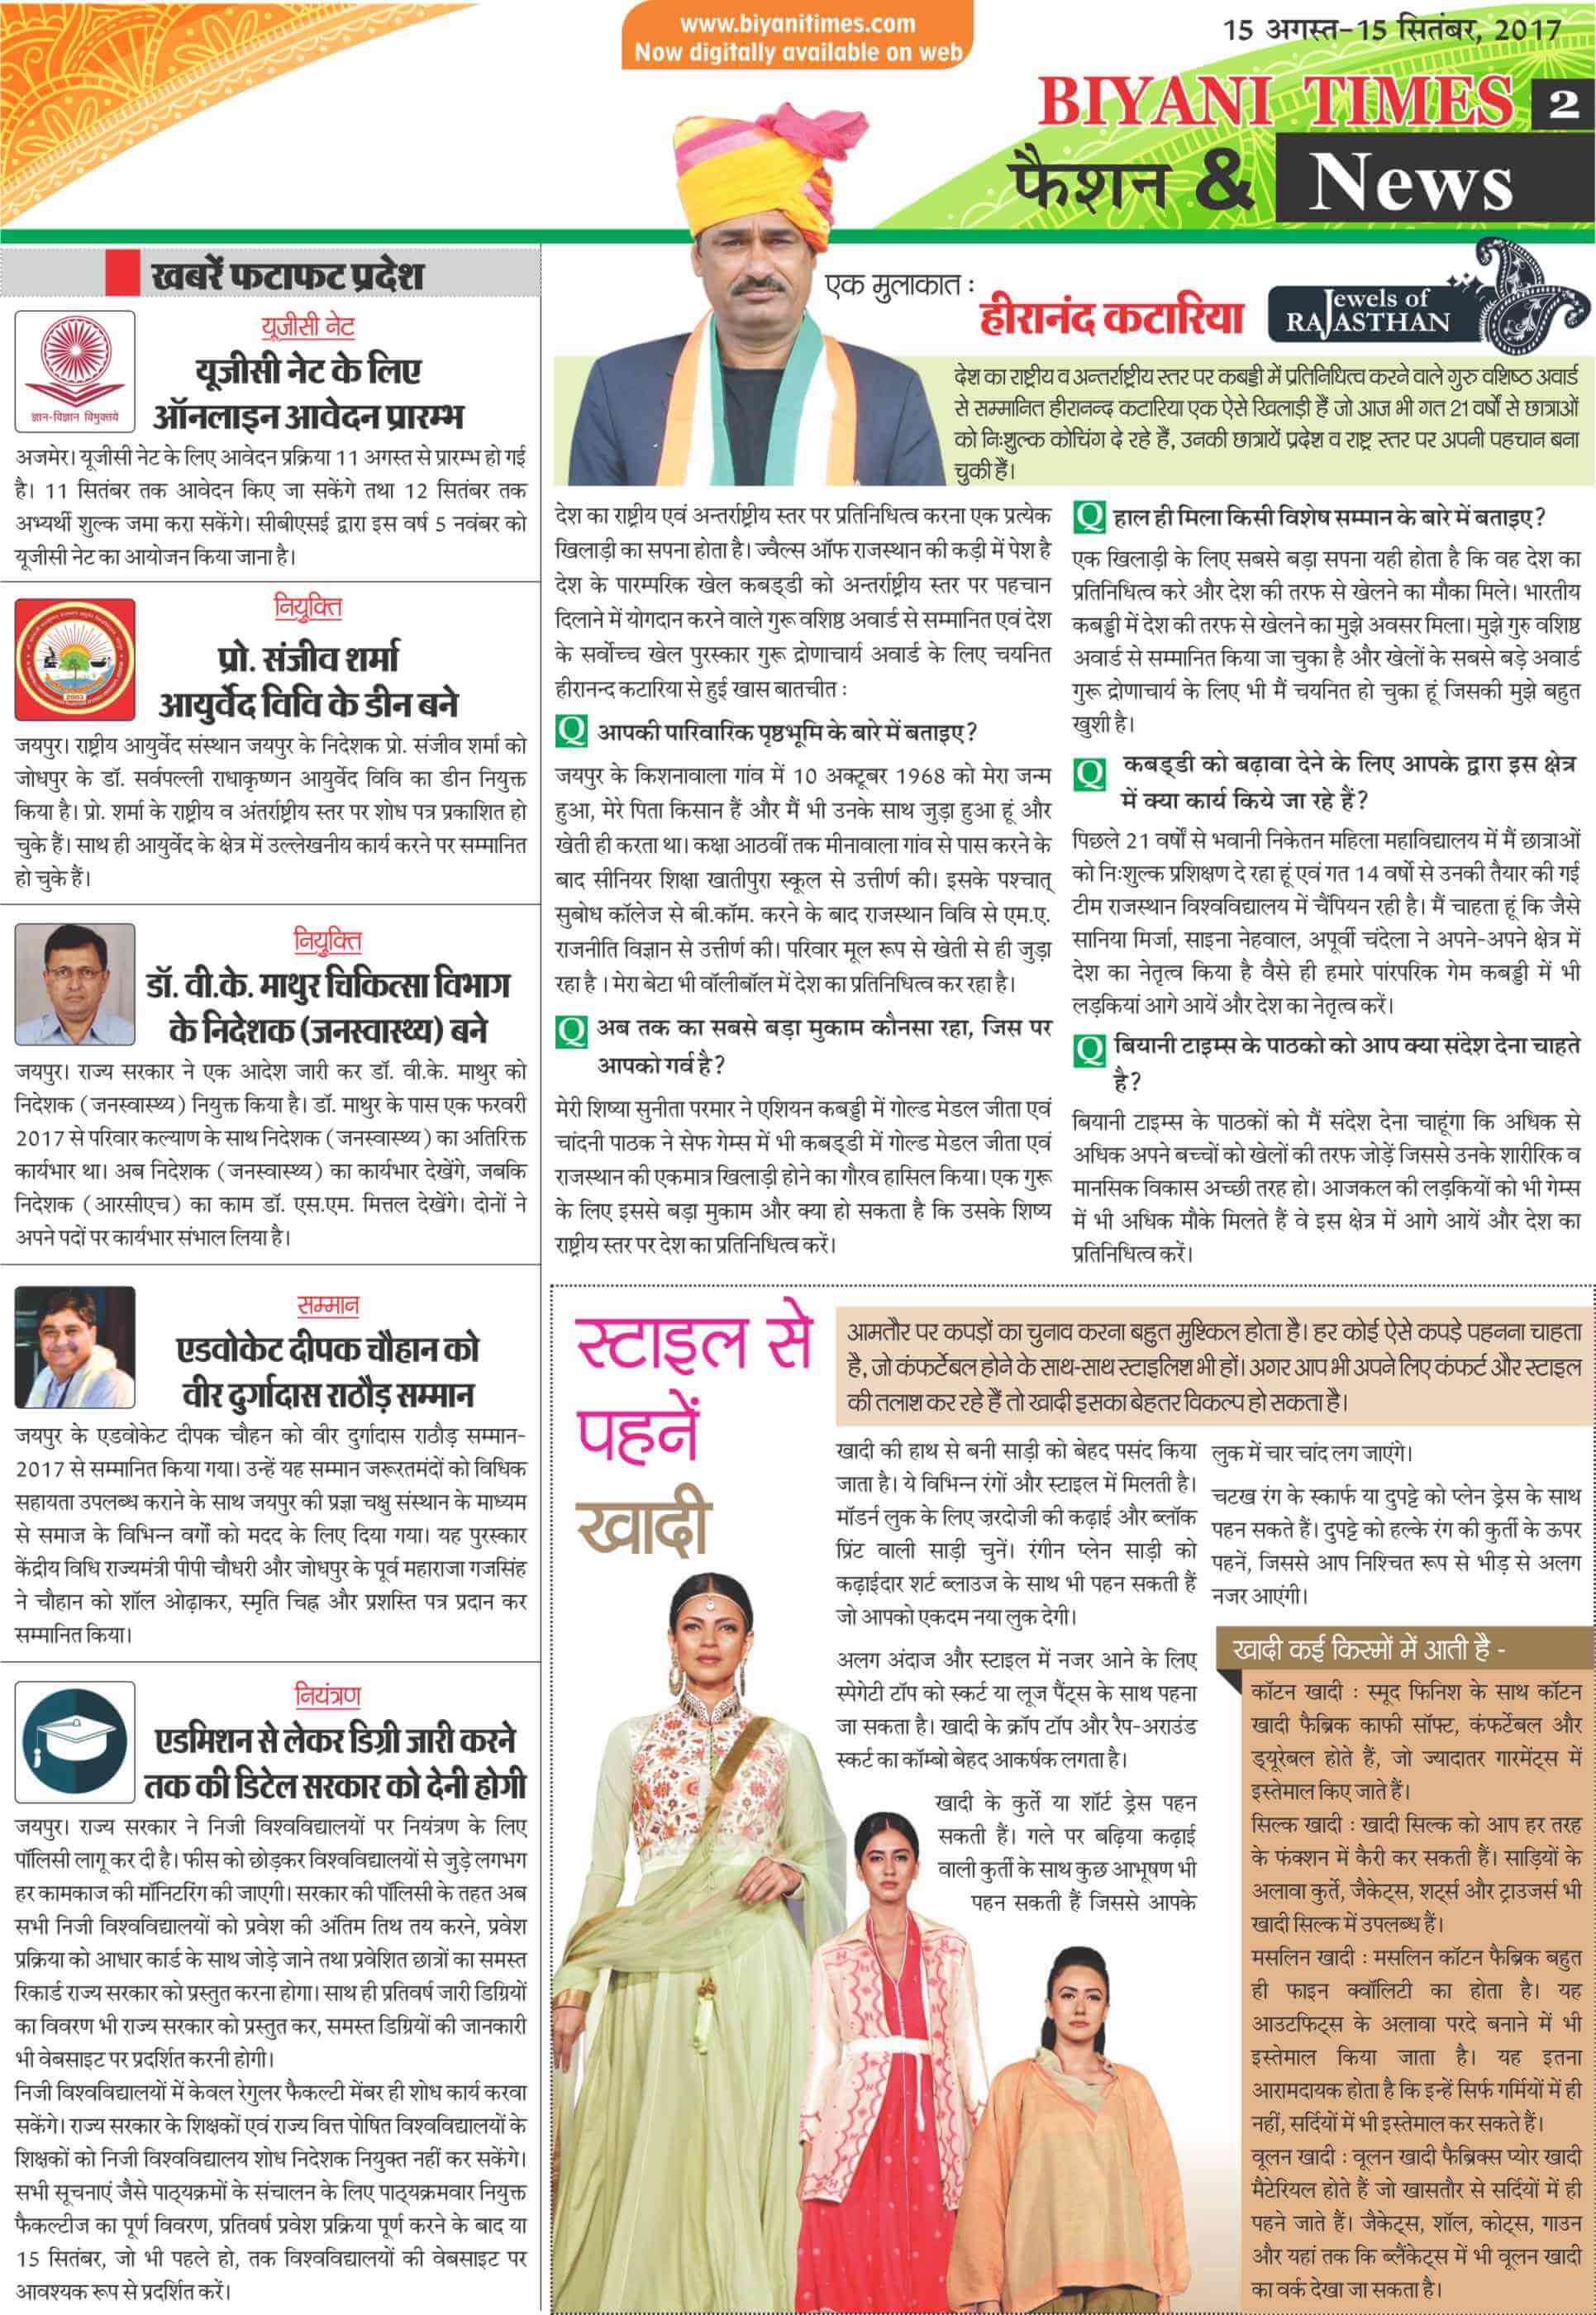 biyani times best hindi news jaipur